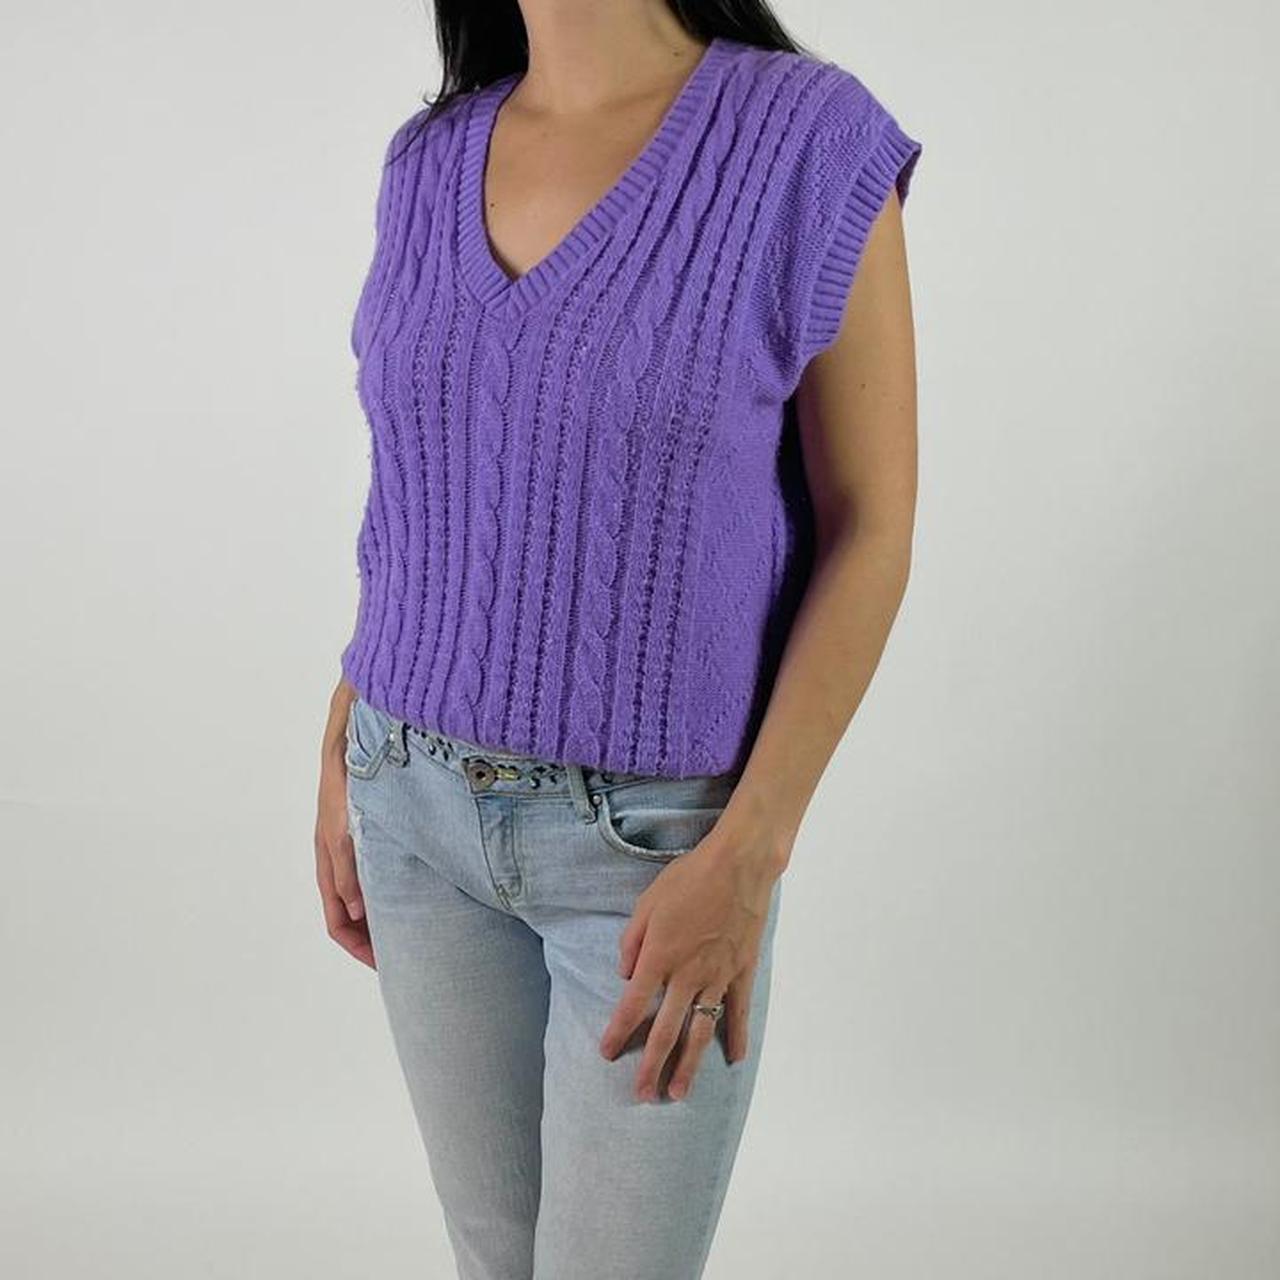 Product Image 2 - Vintage Purple Sweater Vest
Sleeveless sweater